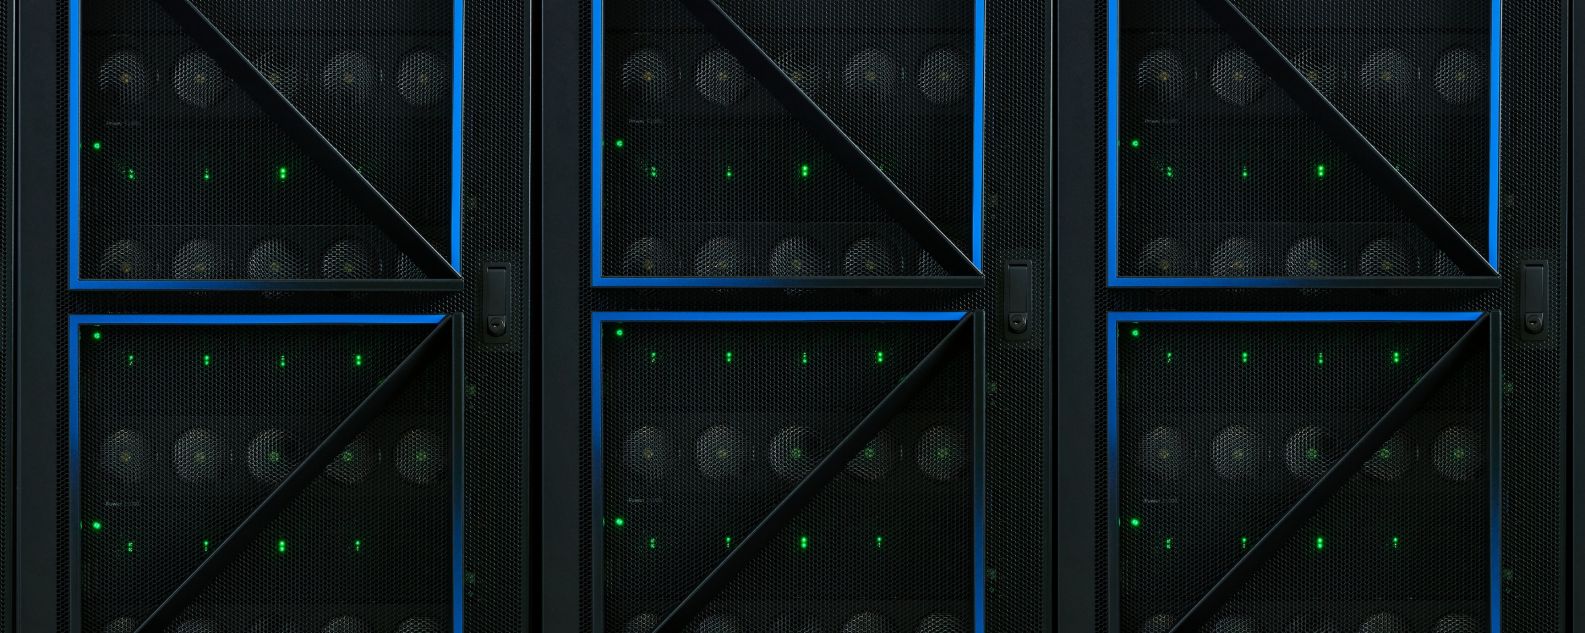 A rack of IBM Power servers